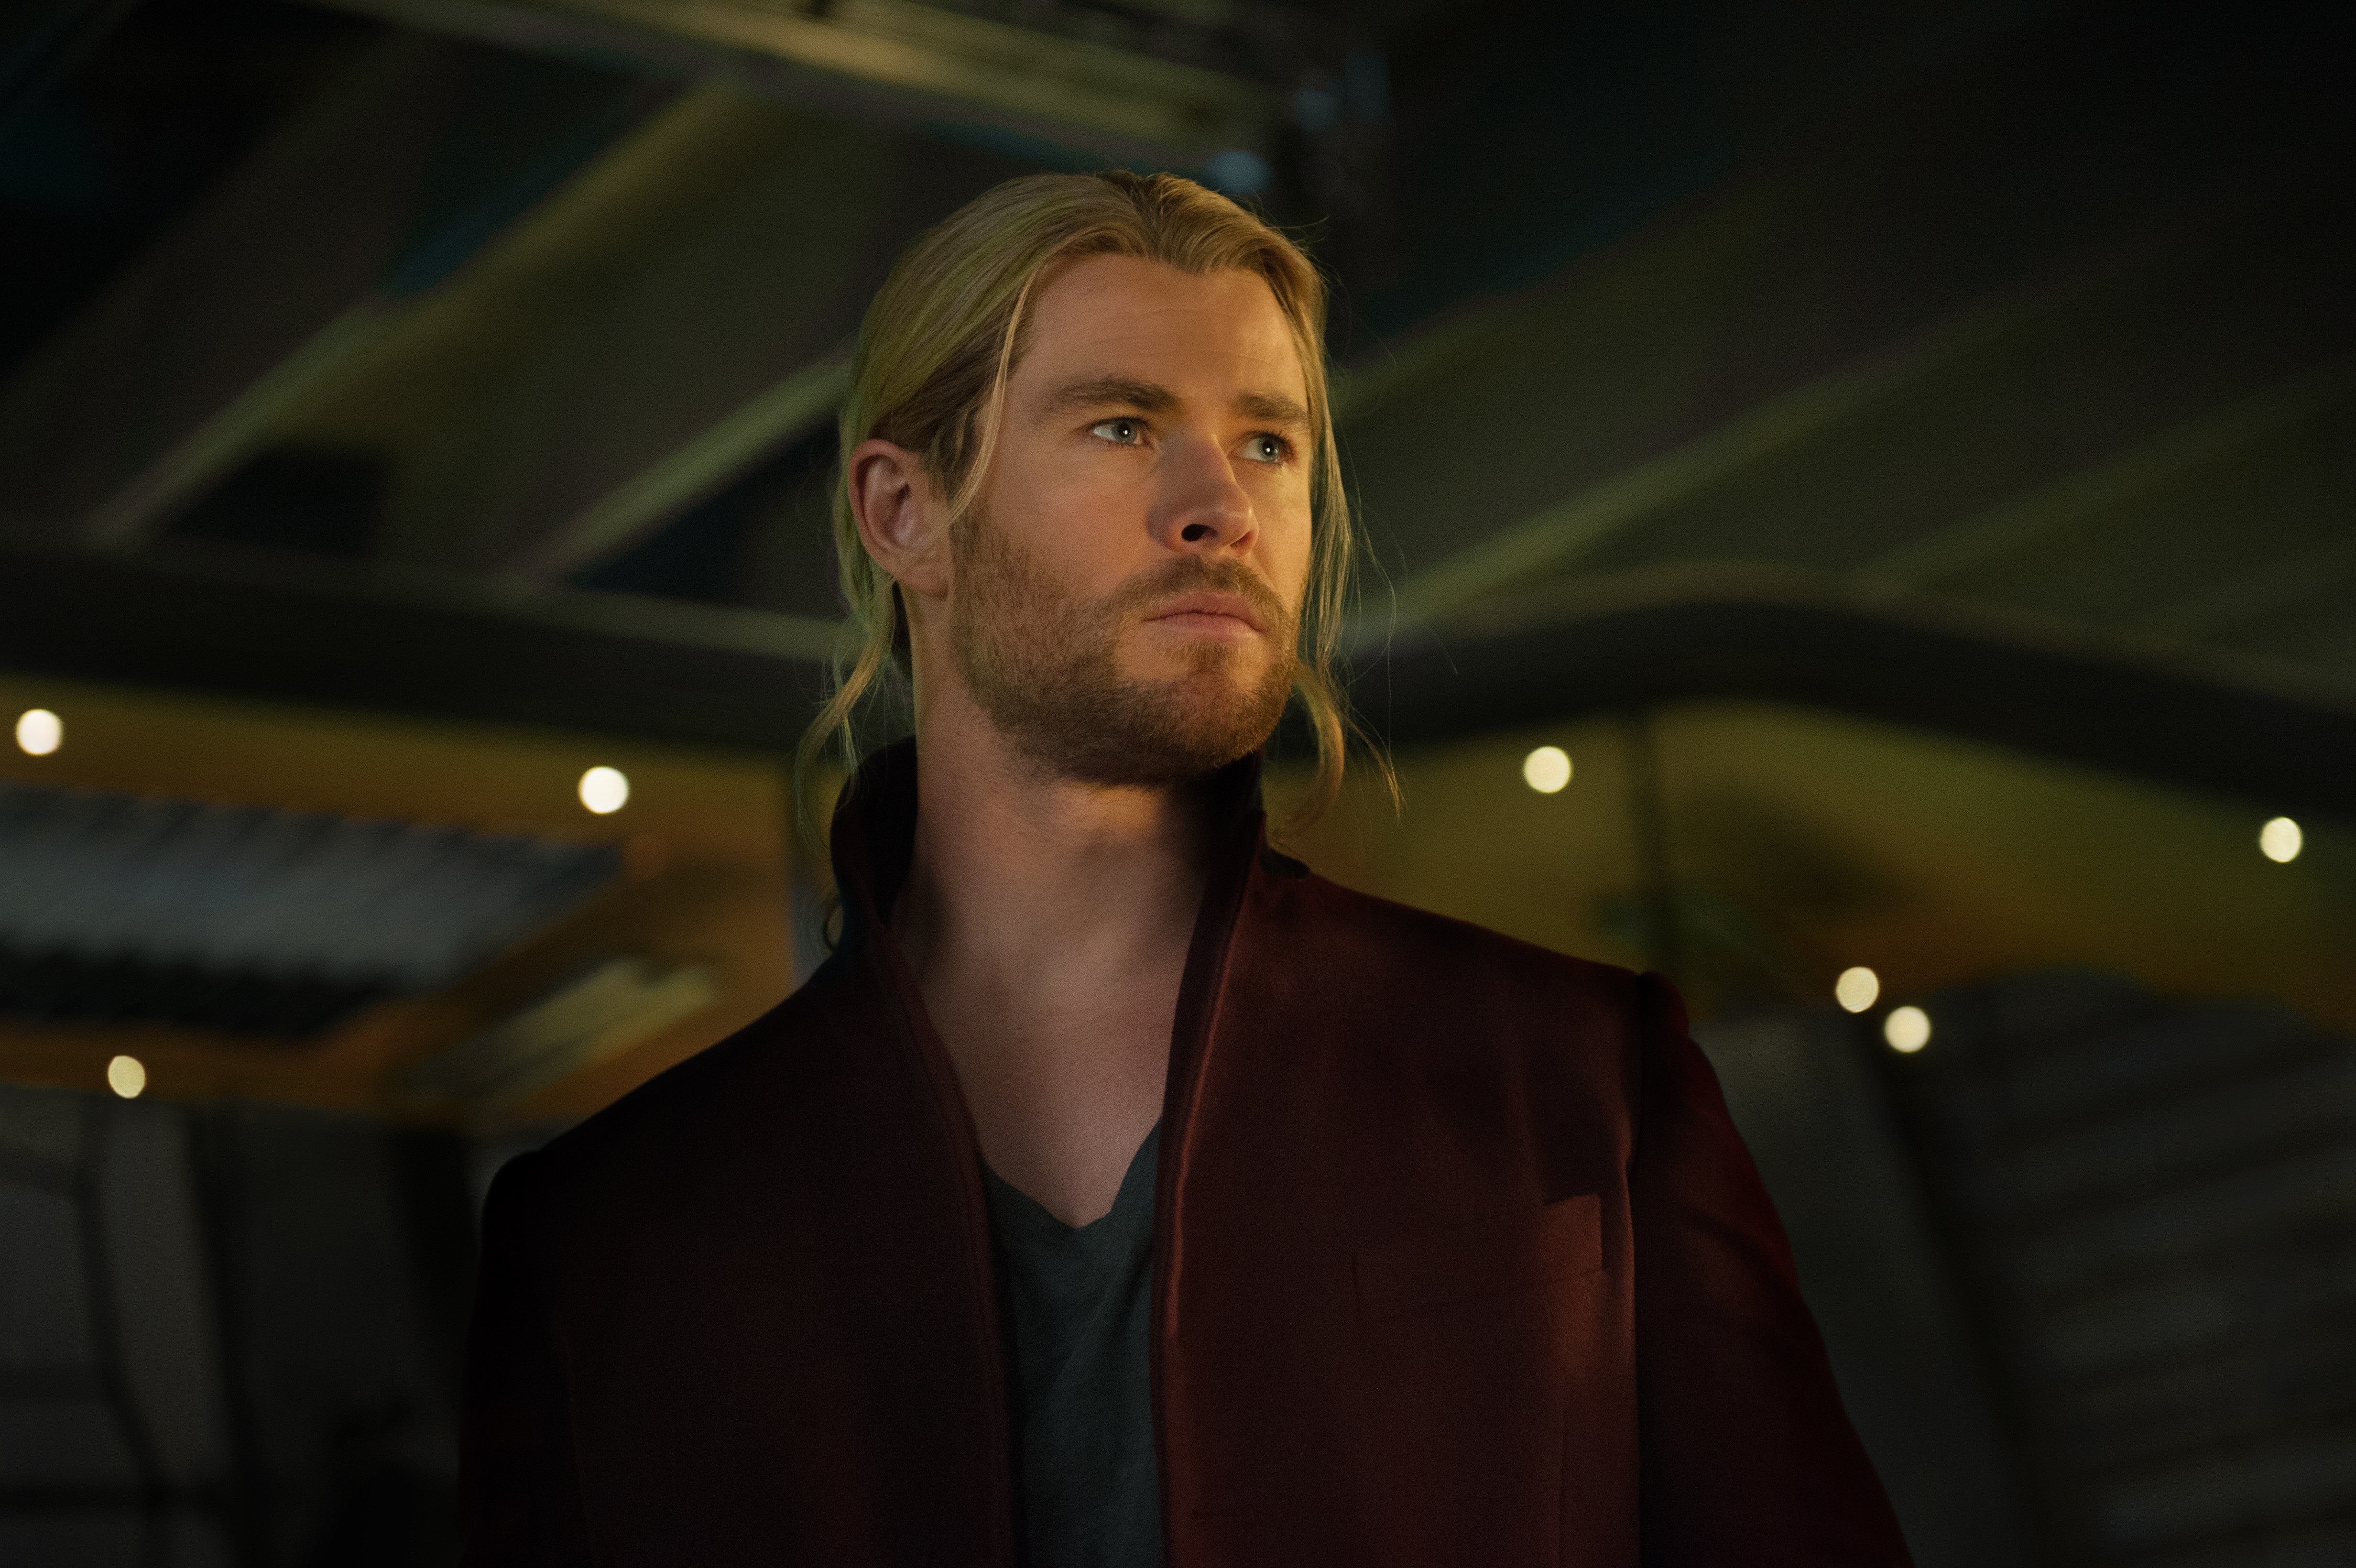 People 4928x3280 Avengers: Age of Ultron The Avengers Thor Chris Hemsworth Marvel Cinematic Universe movies men actor beard superhero film stills